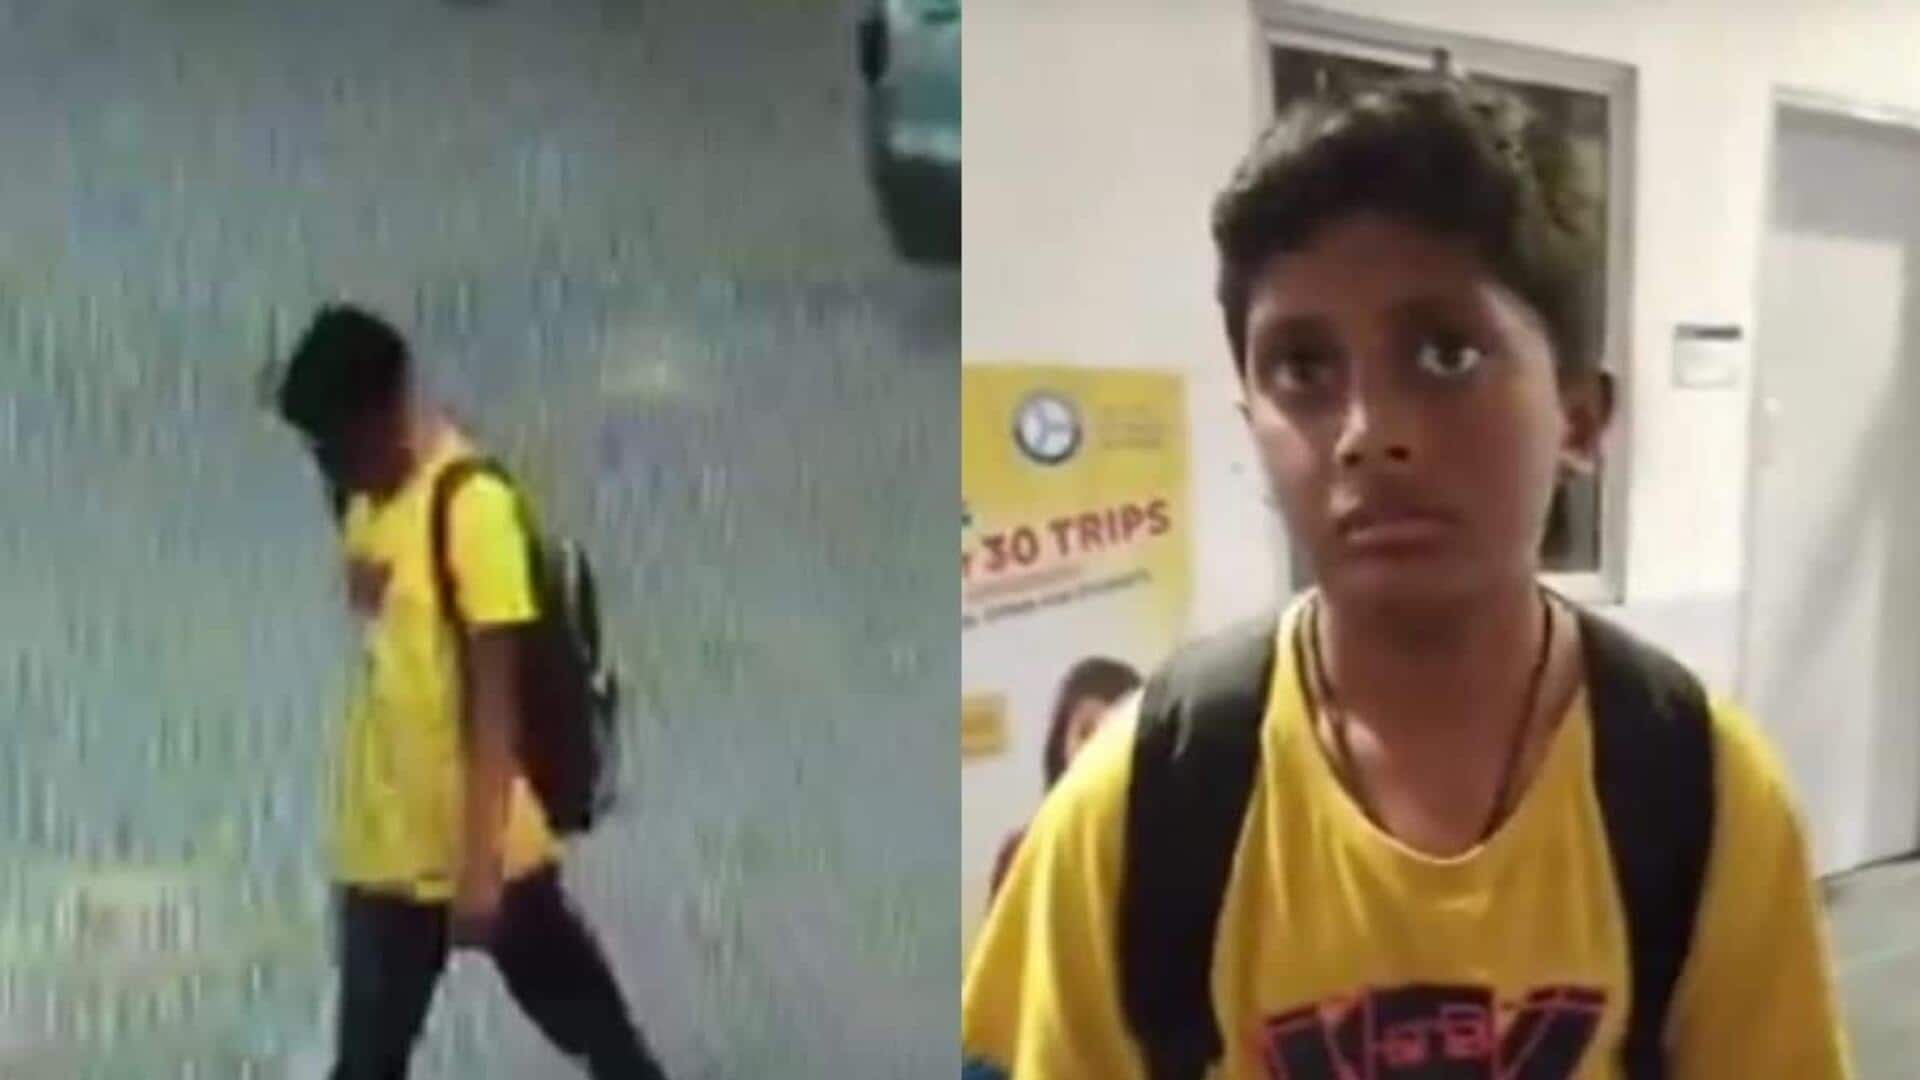 Missing Bengaluru boy: కోచింగ్ సెంటర్ నుండి తప్పిపోయిన బెంగళూరు బాలుడు , హైదరాబాద్‌లోప్రత్యక్షం 